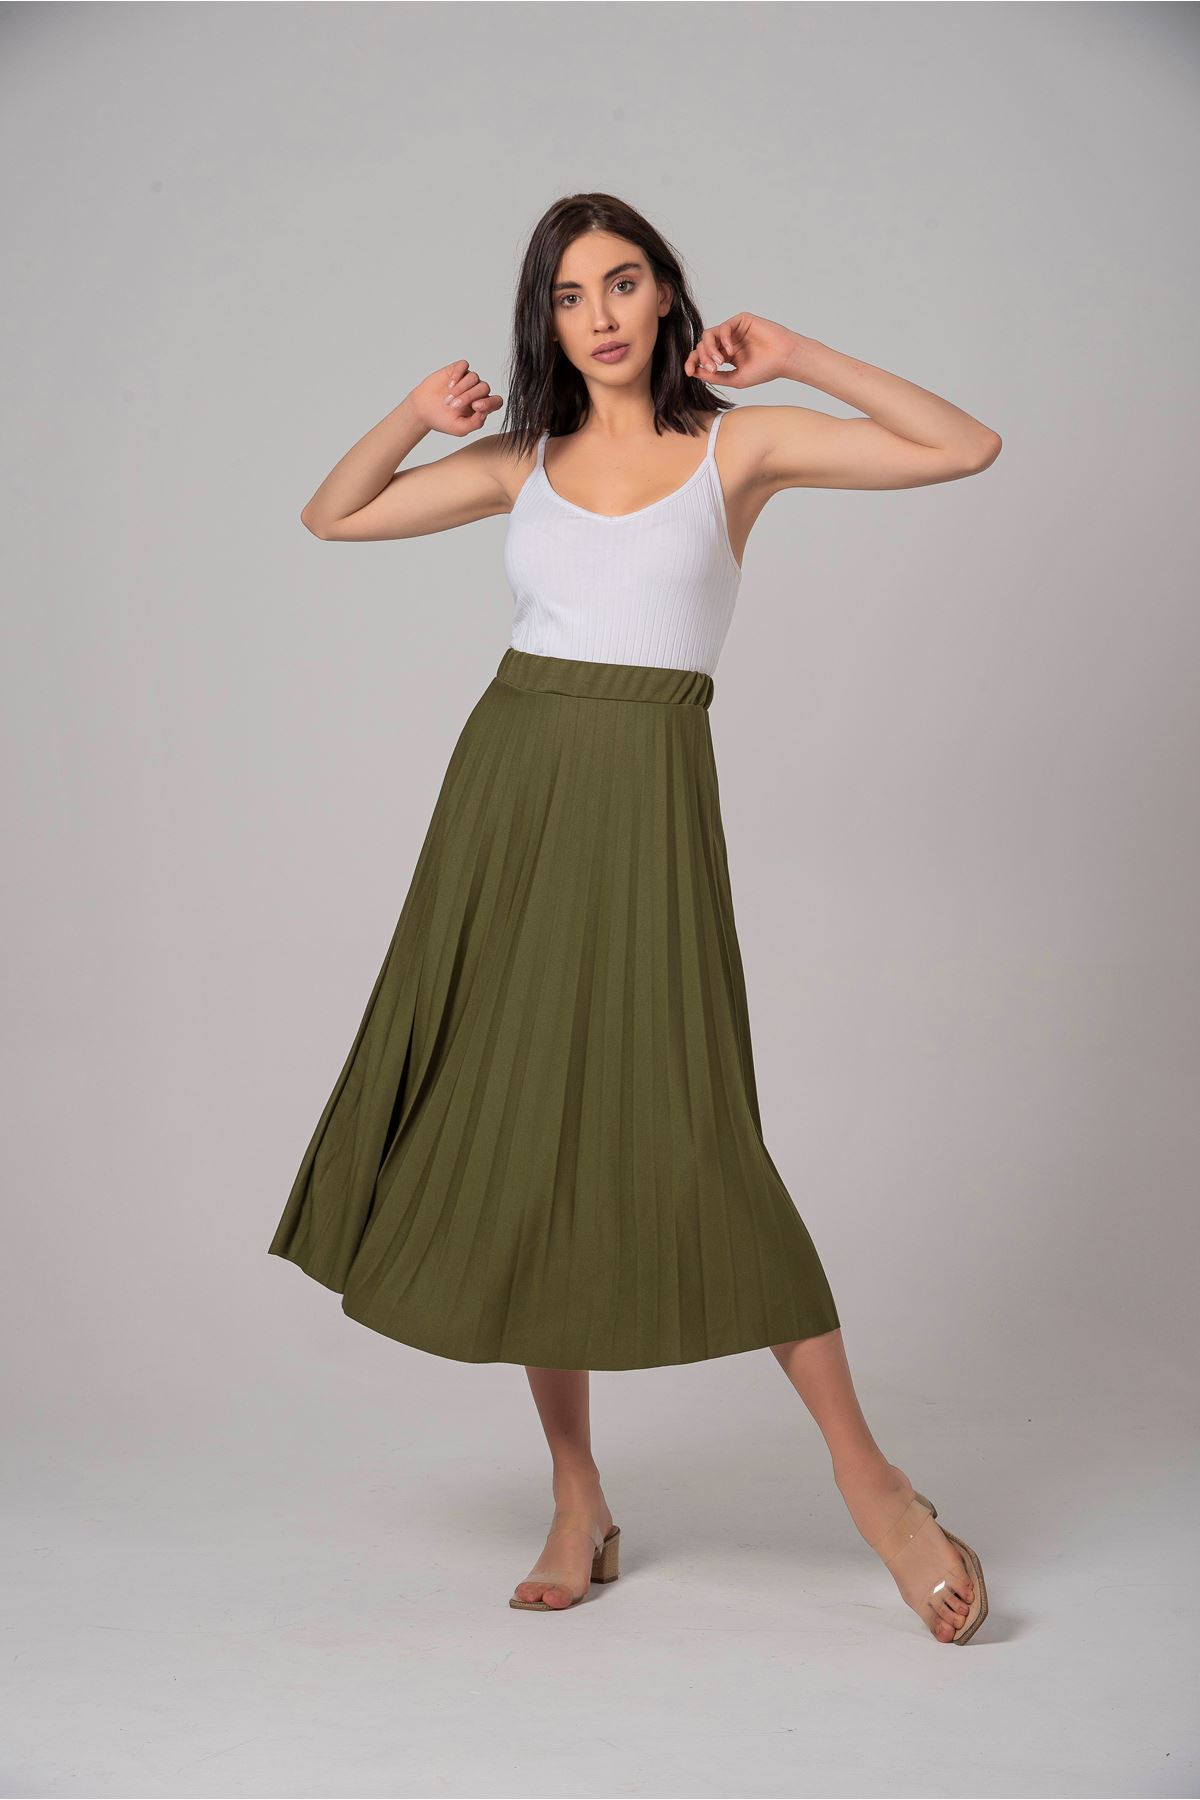 Lycra Knit FabricMidi Comfy Fit Pleated Women'S Skirt - Khaki 